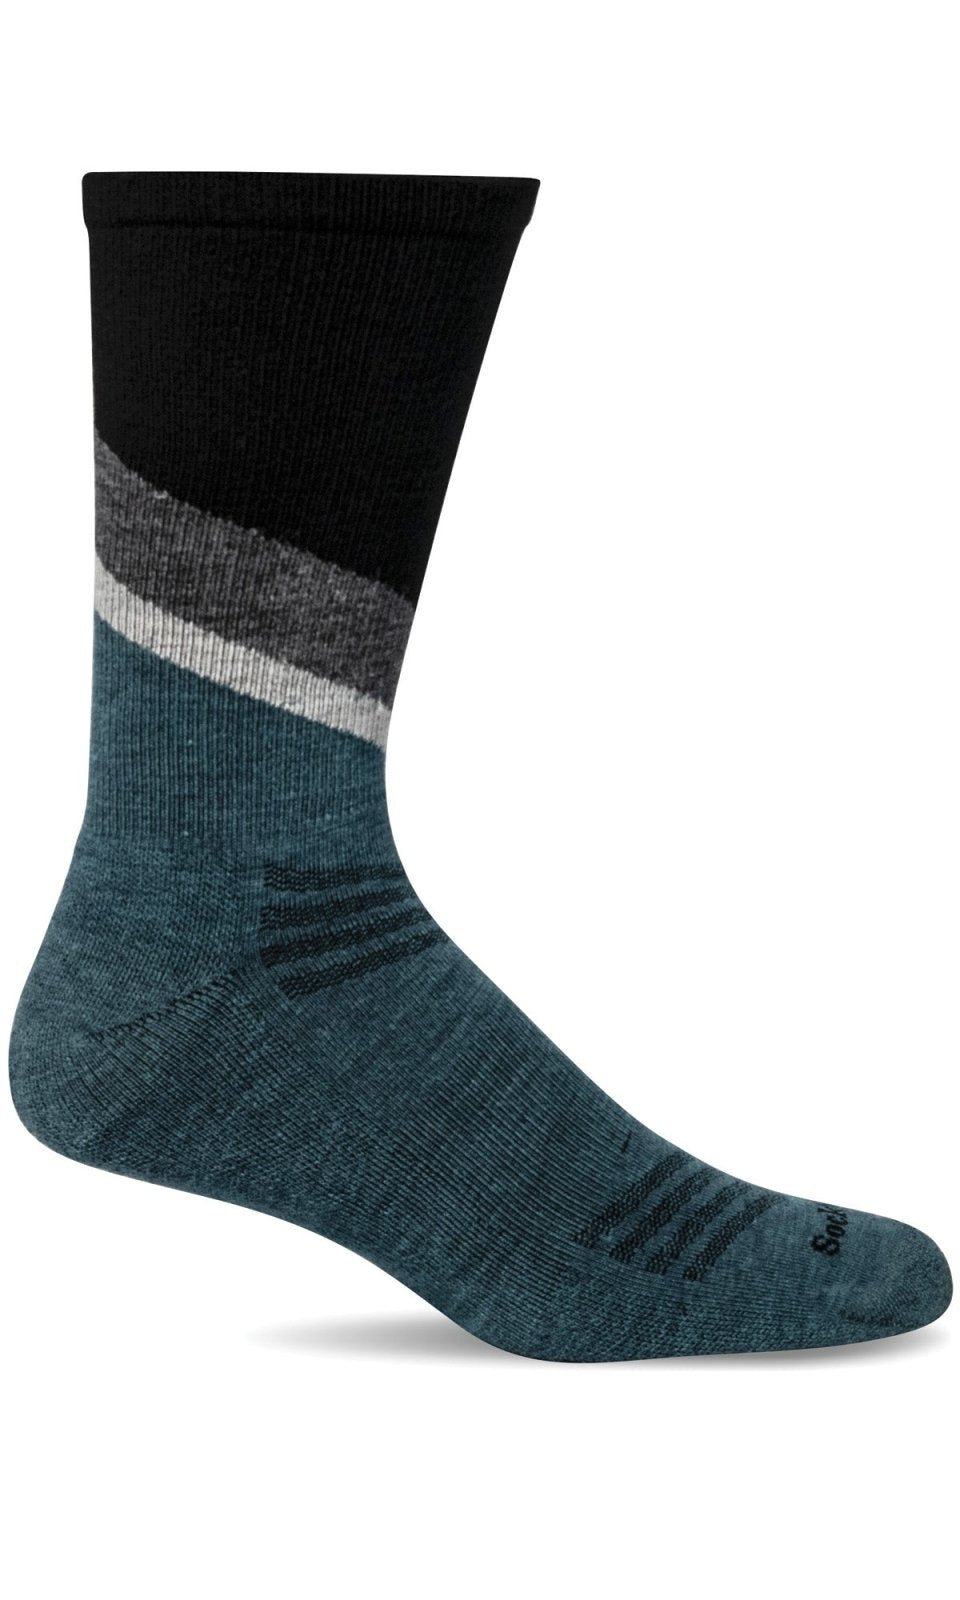 Men's Relay | Essential Comfort Socks - Merino Wool Essential Comfort - Sockwell